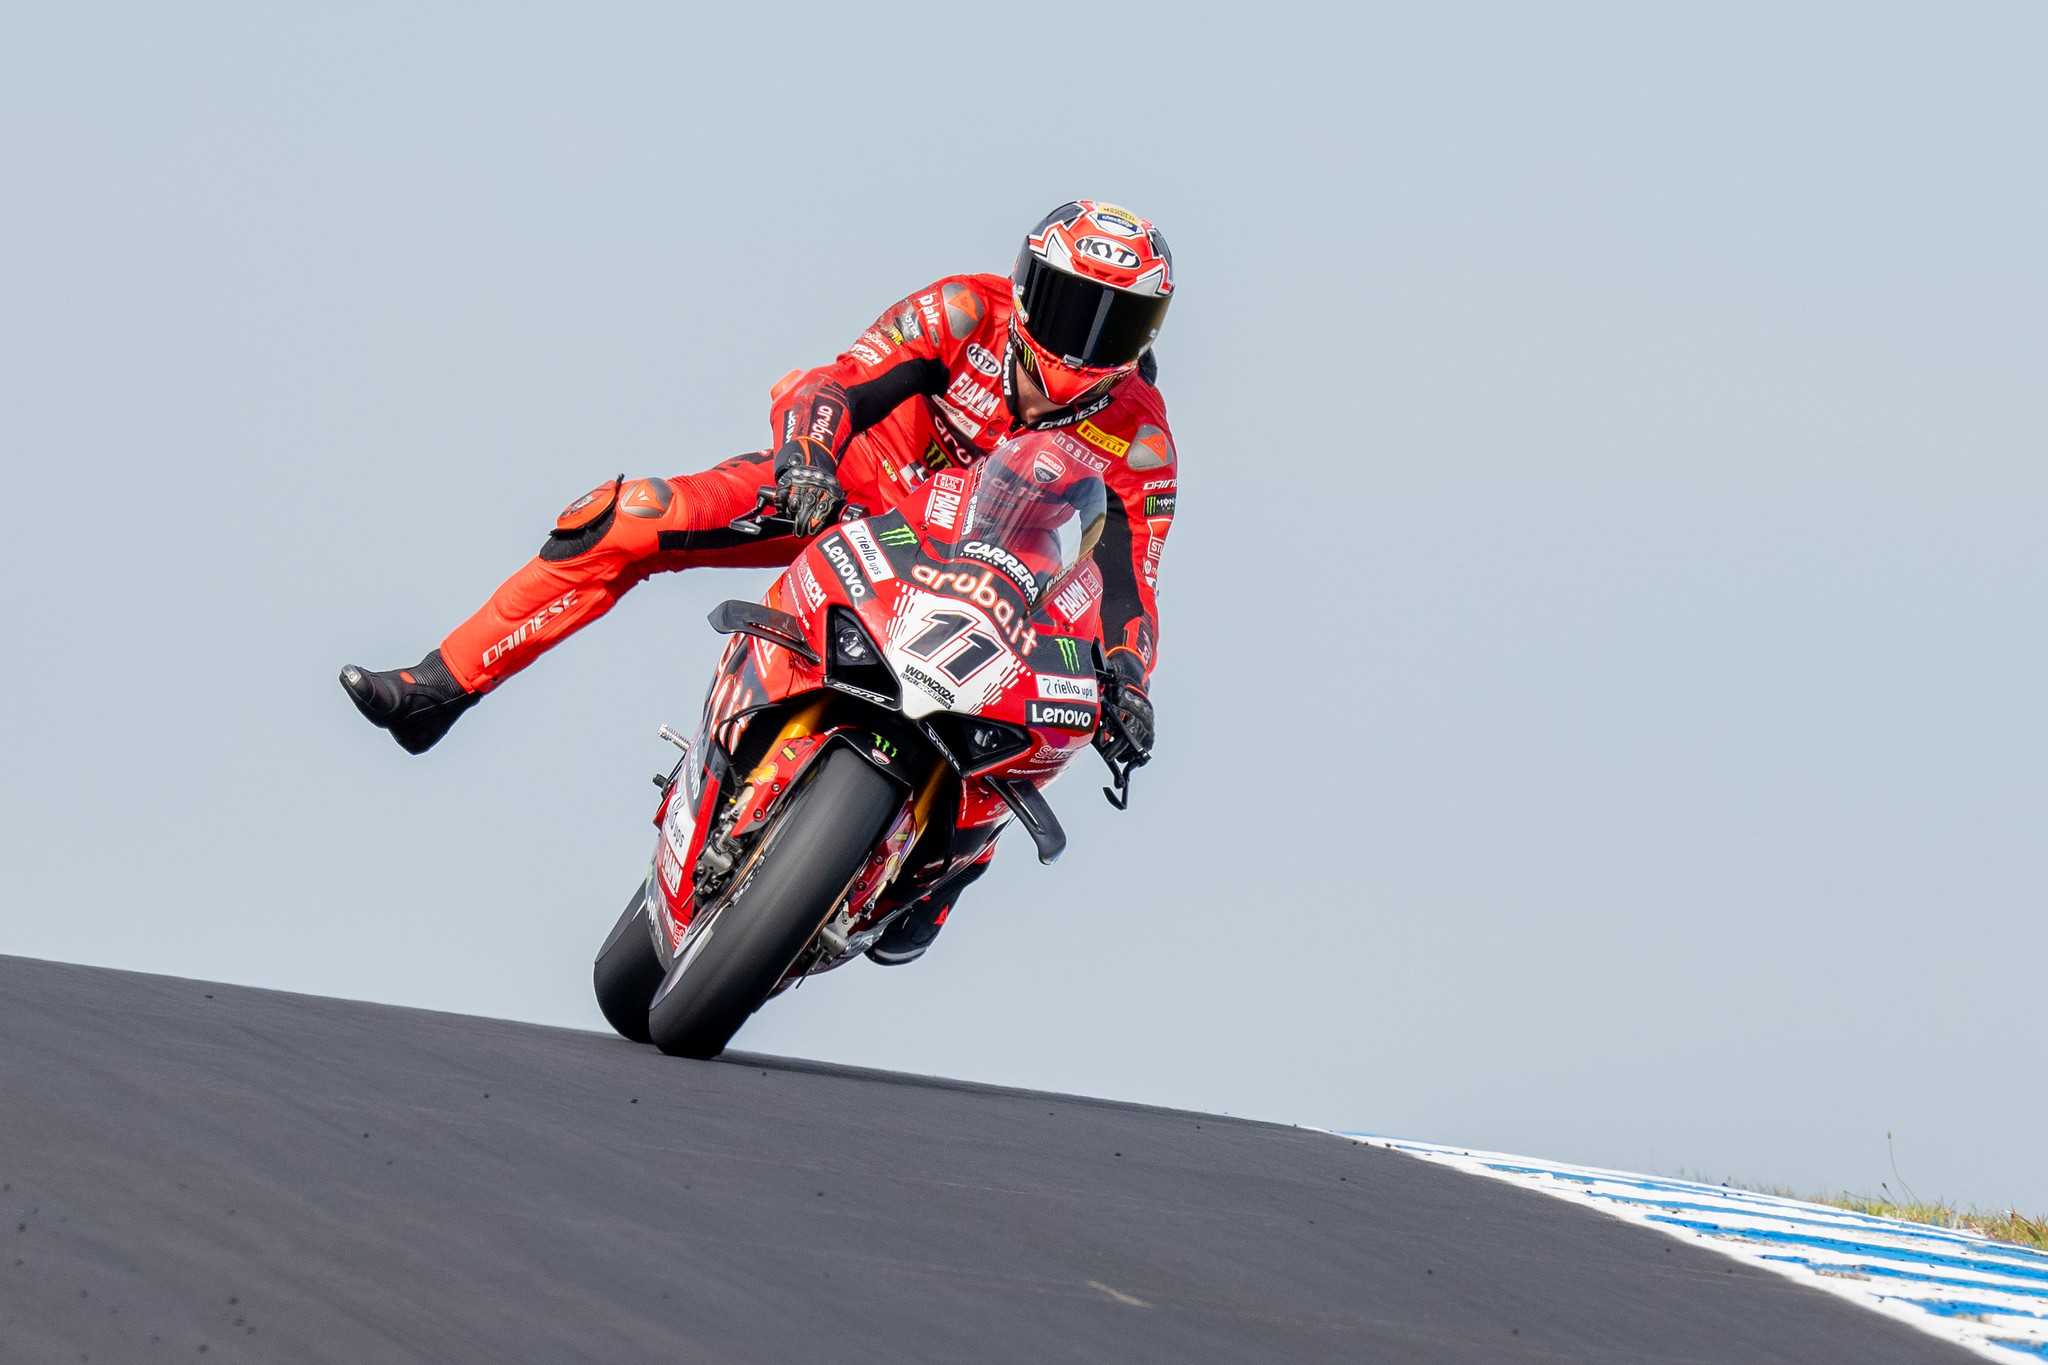 #11 Nicolo Bulega - ITA - Aruba.It Racing - Ducati  -  Ducati Panigale V4R